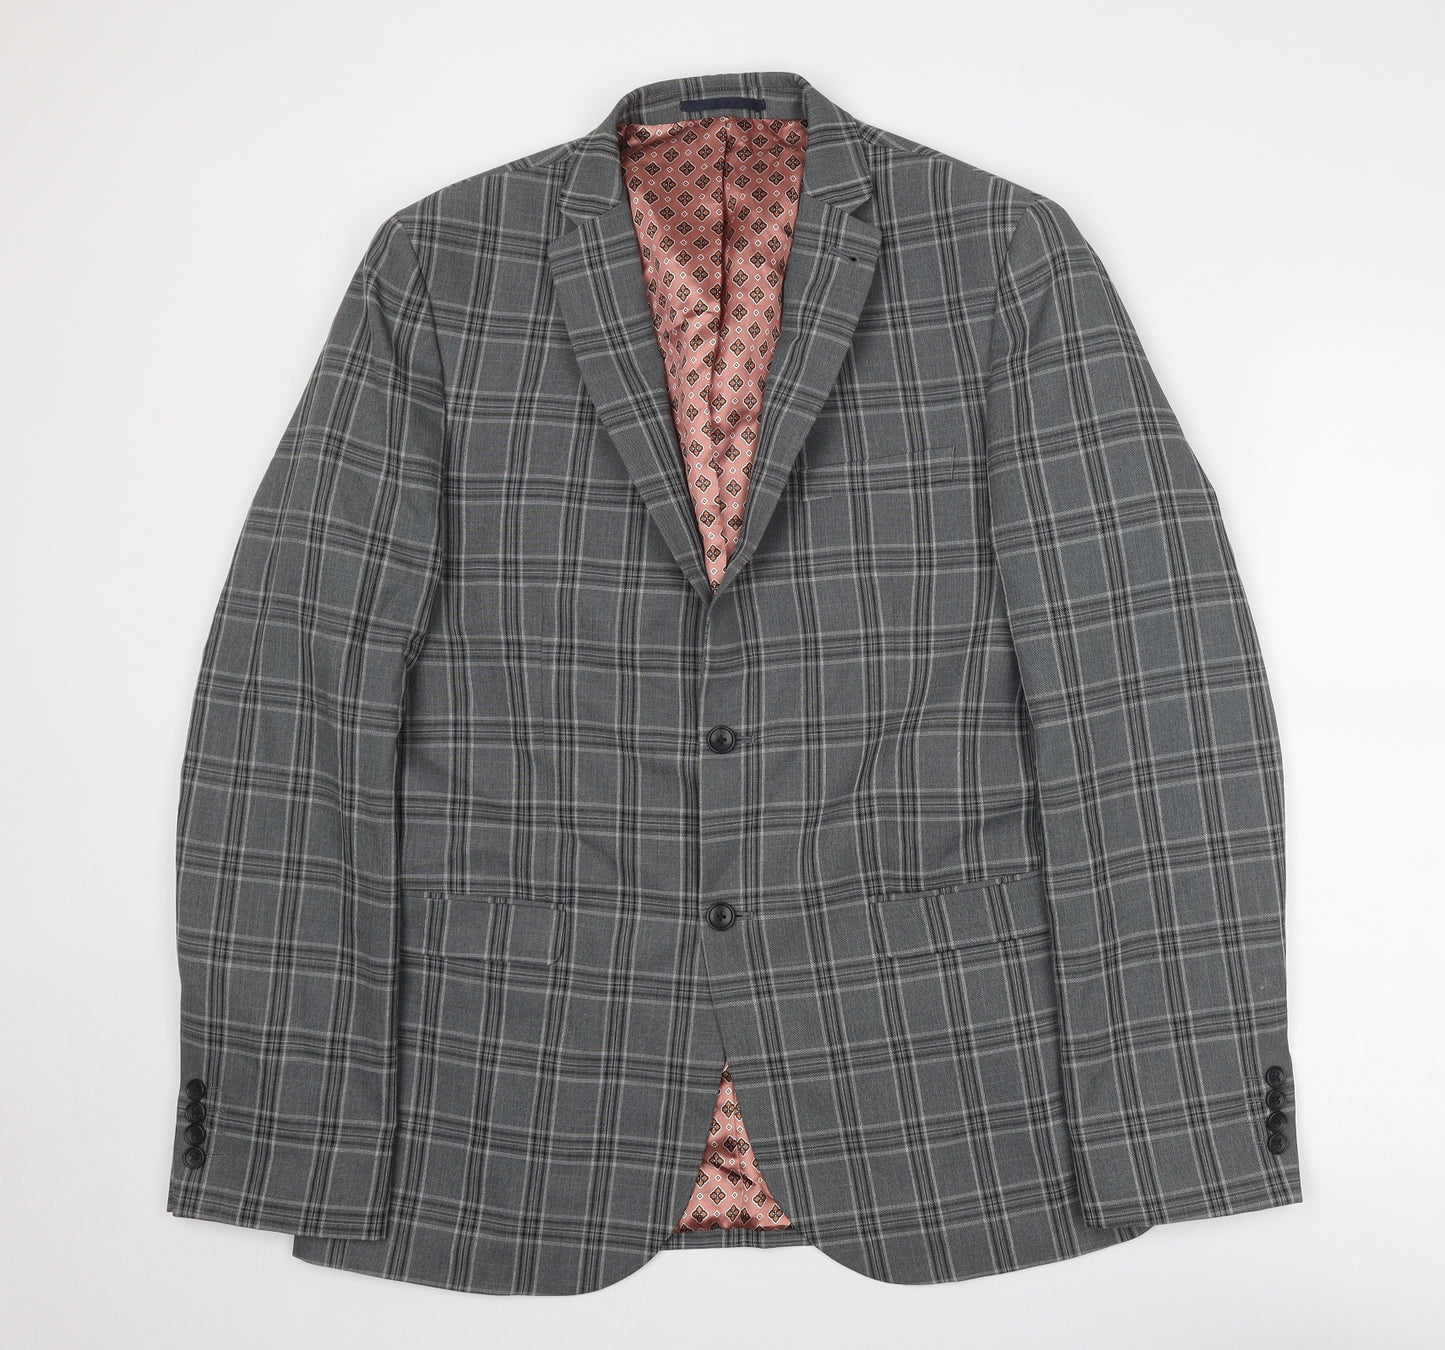 NEXT Mens Grey Plaid Polyester Jacket Blazer Size 42 Regular